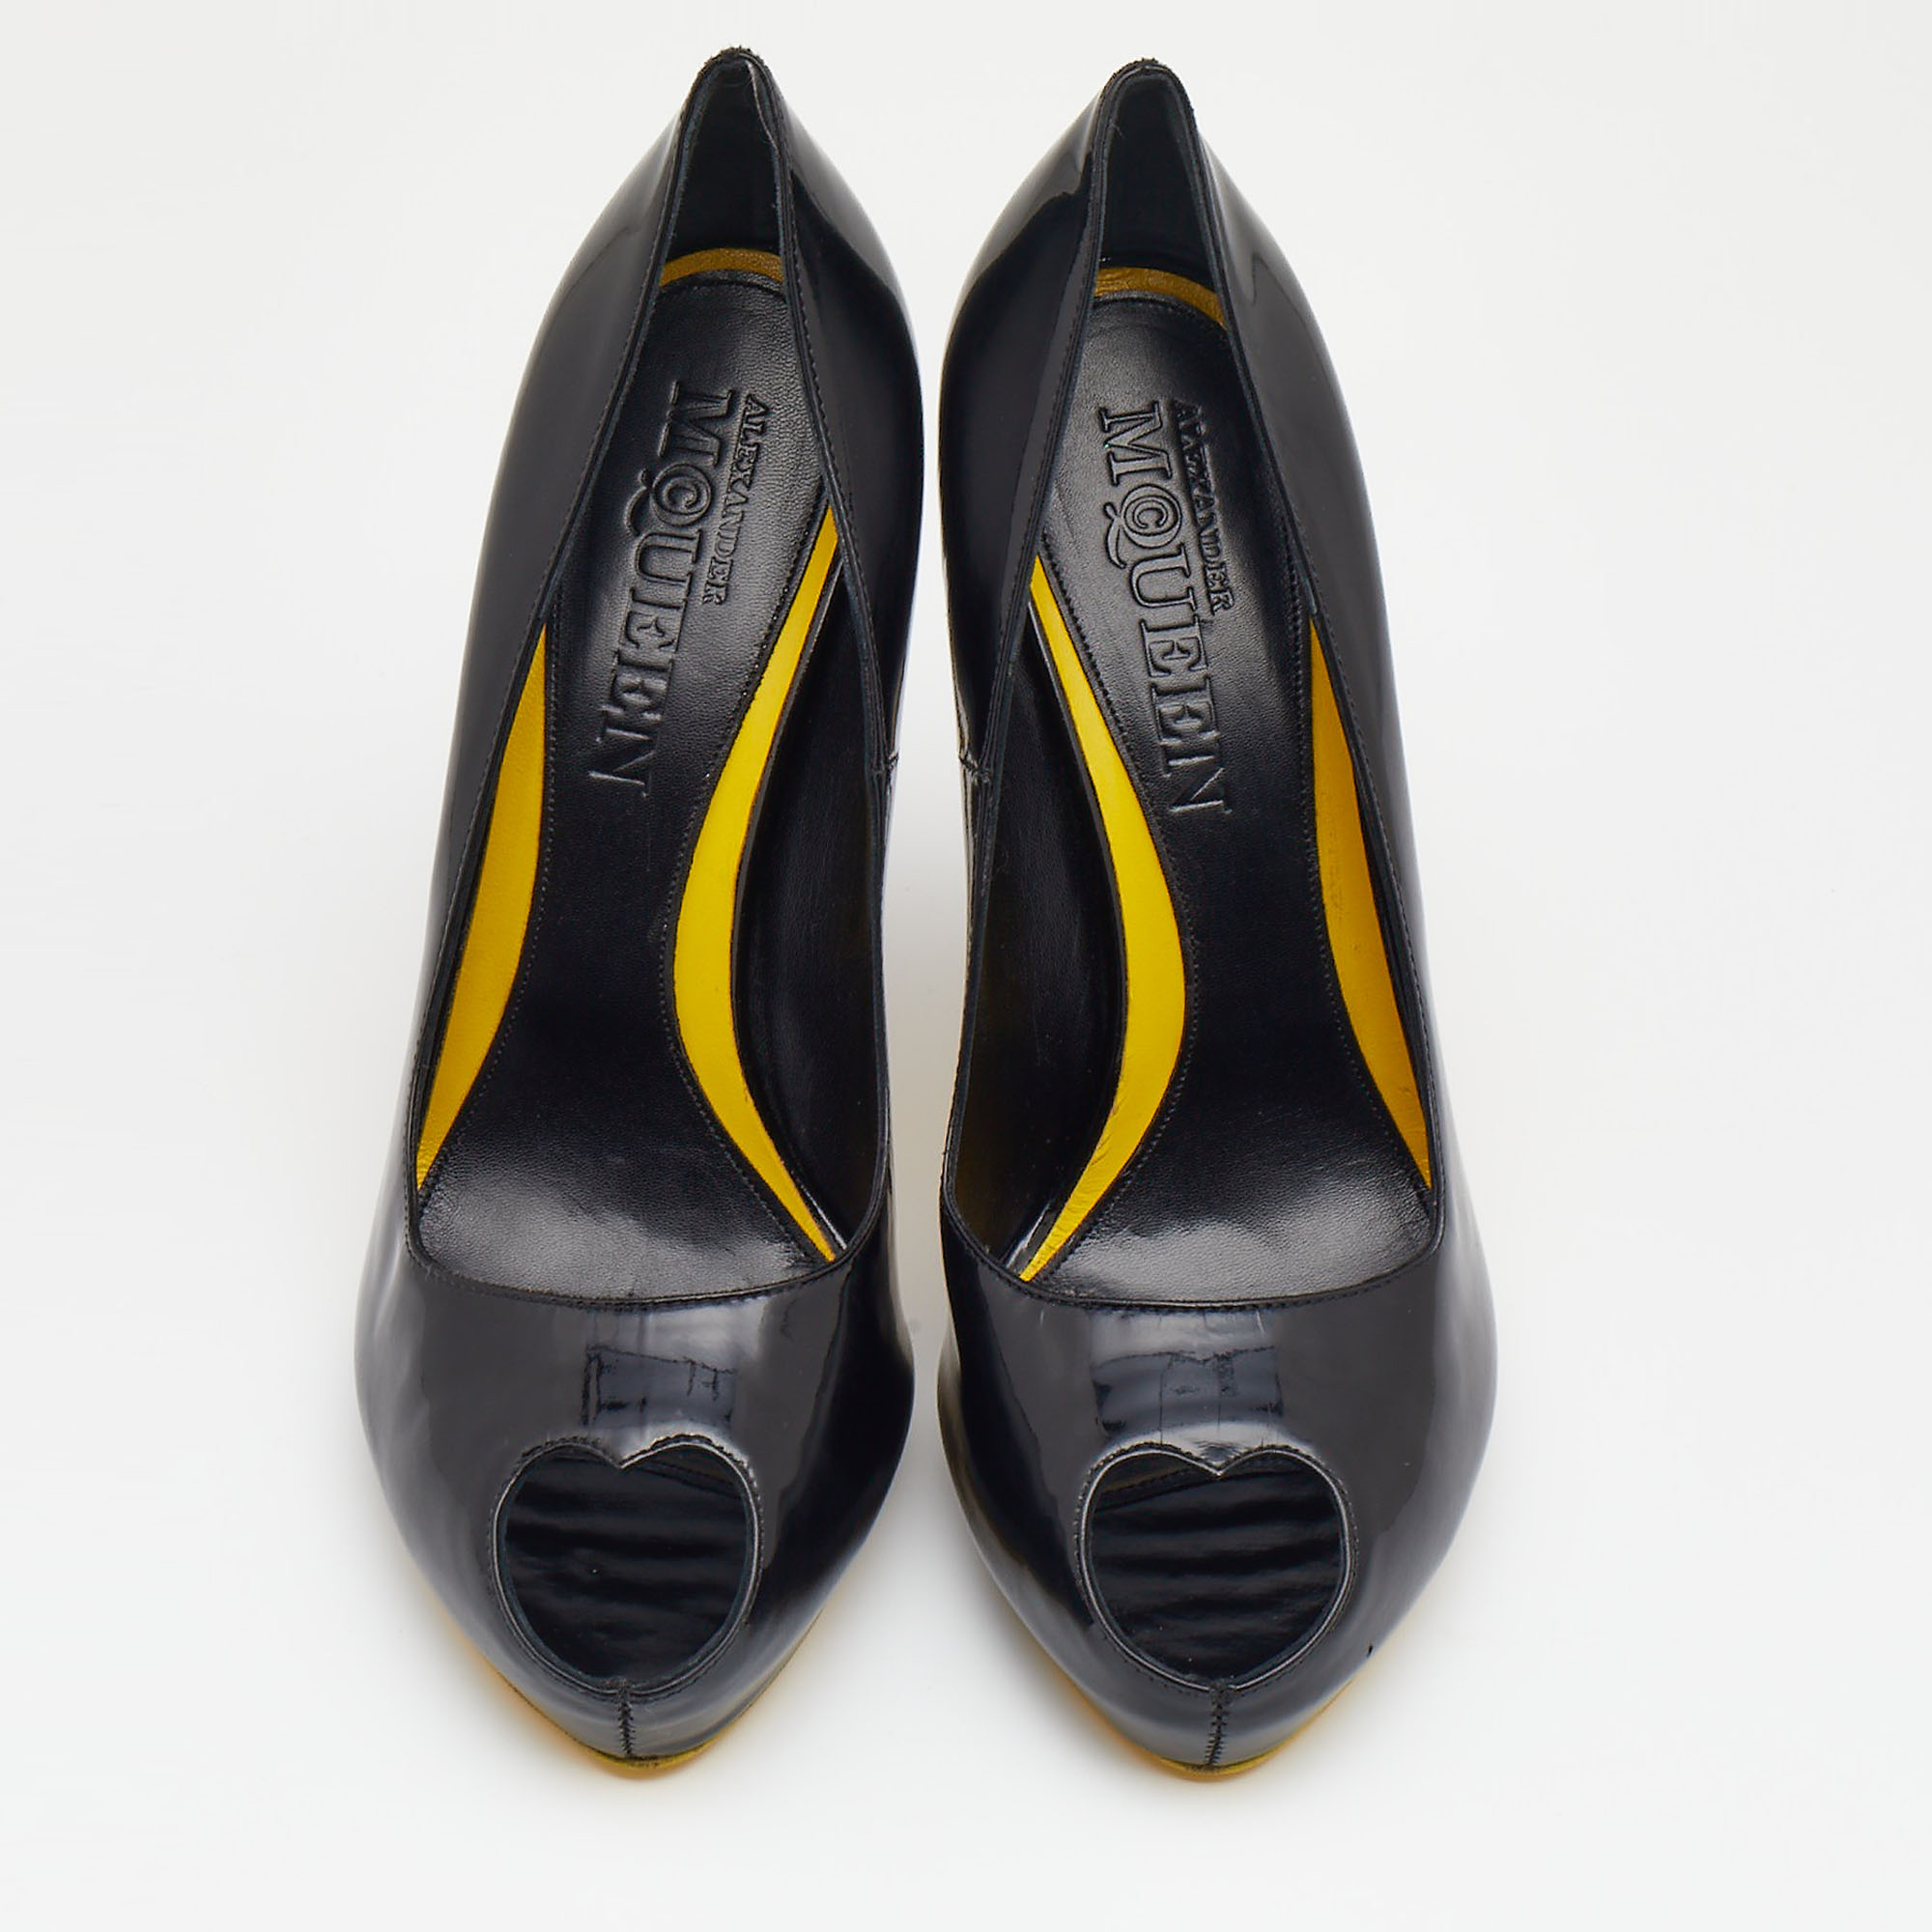 Alexander McQueen Patent Leather Peep Toe Pumps Size 40